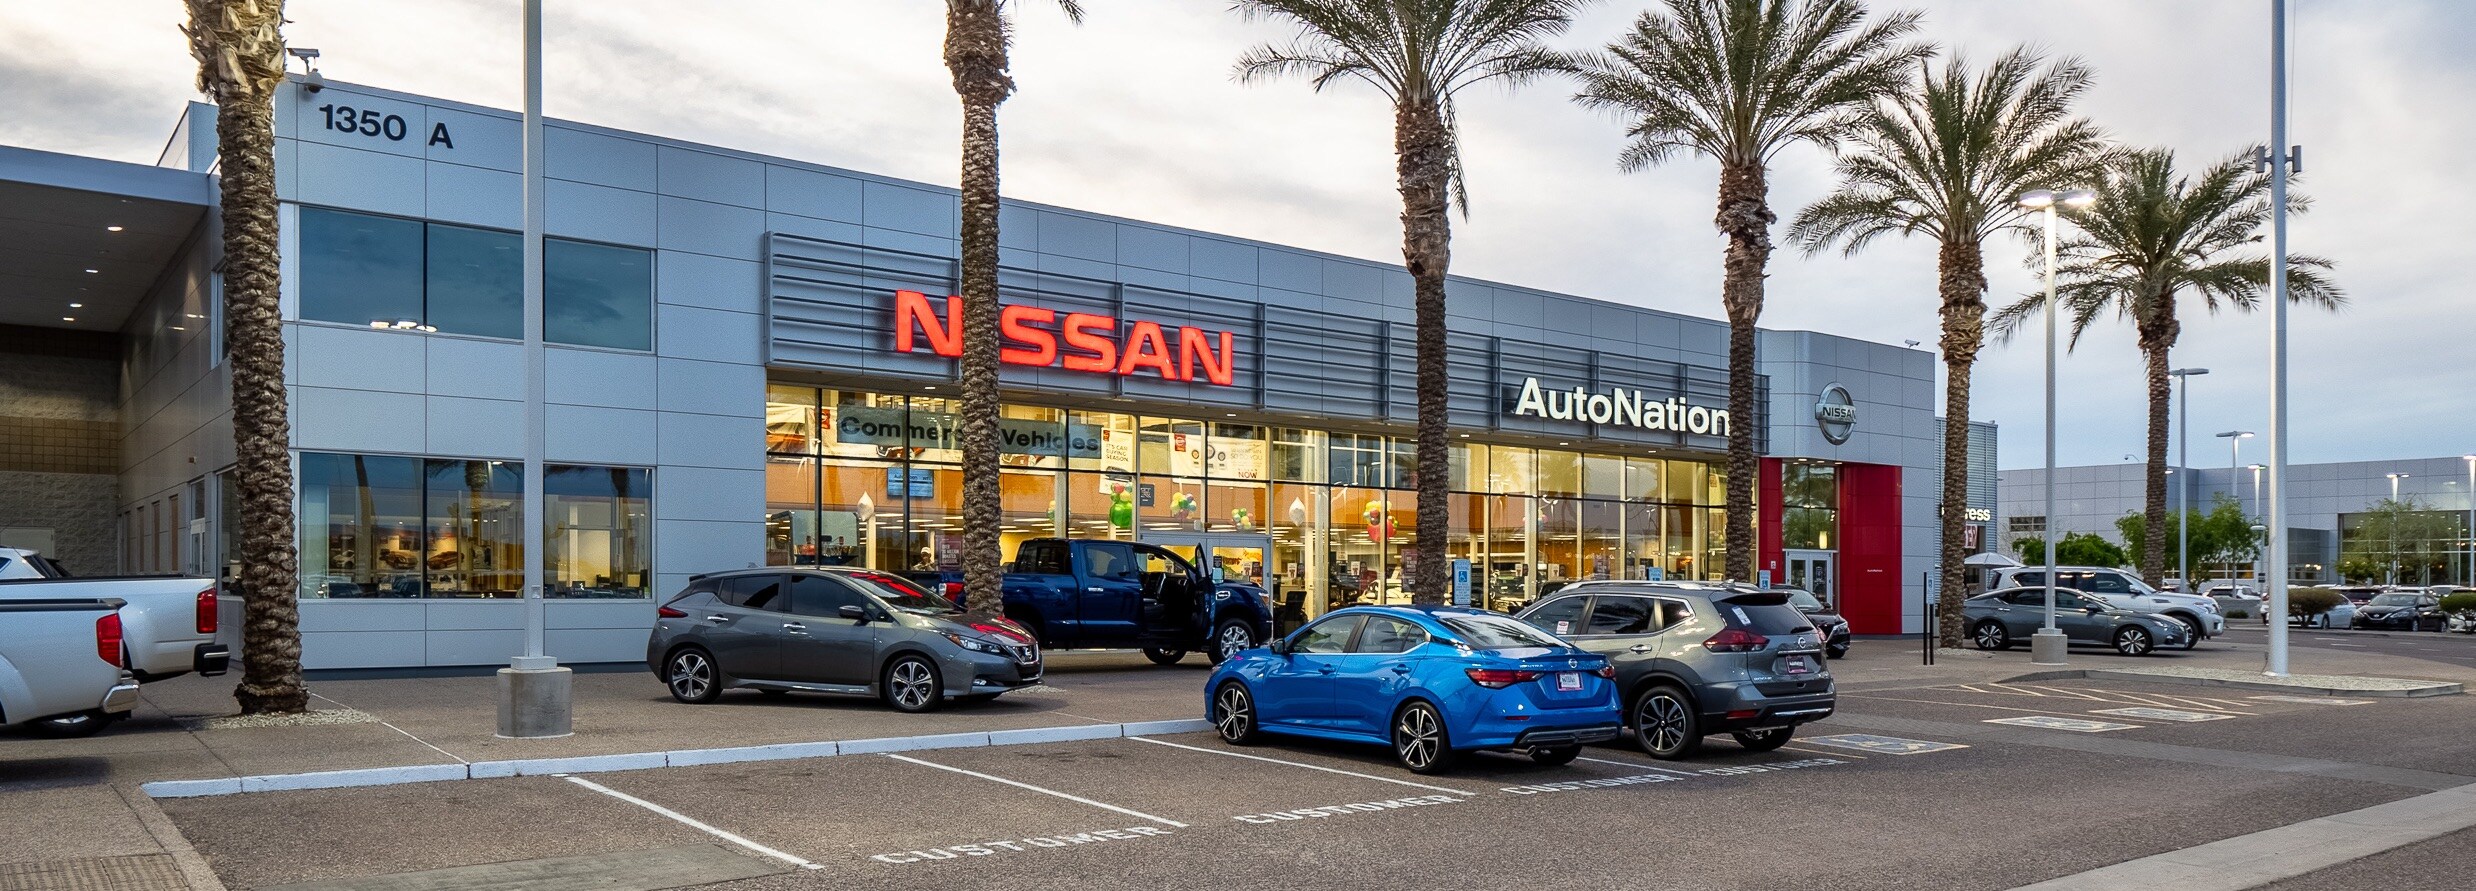 Exterior view of AutoNation Nissan Chandler